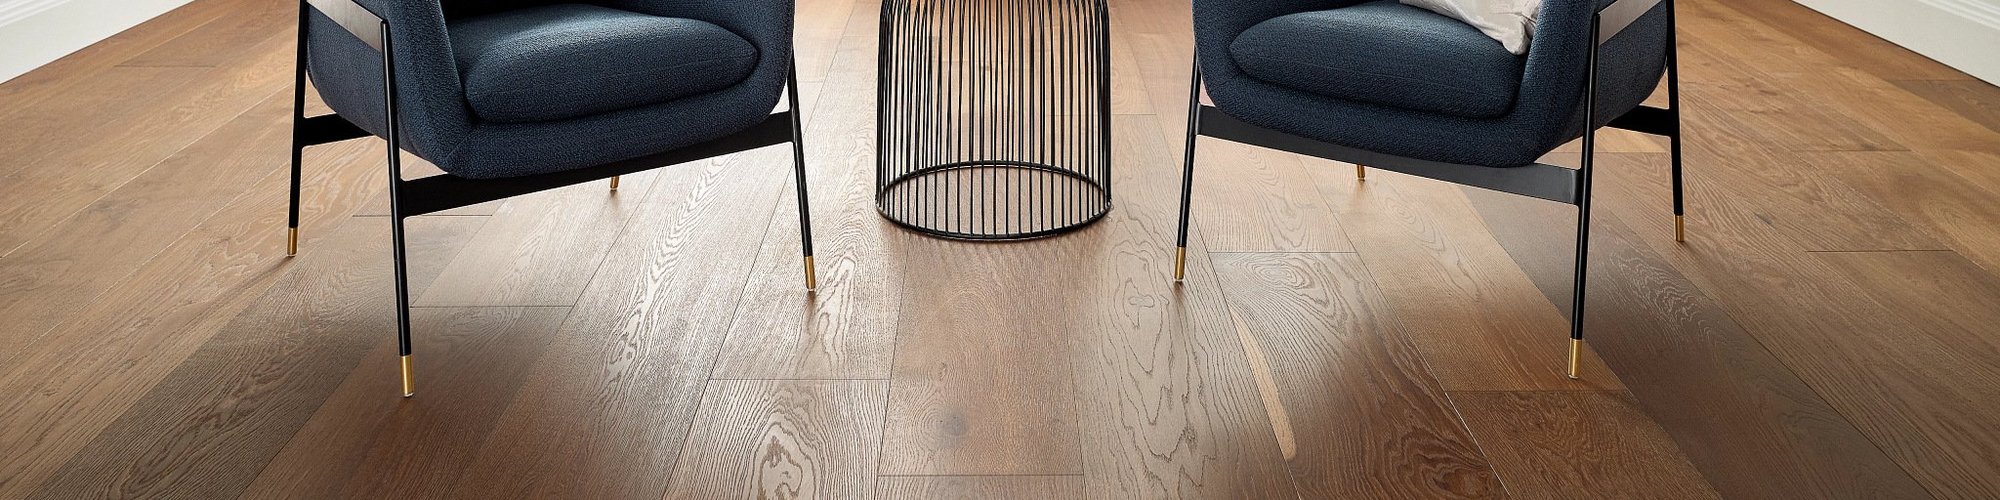 two arm chairs on wood floors - Kallod Carpet, Inc